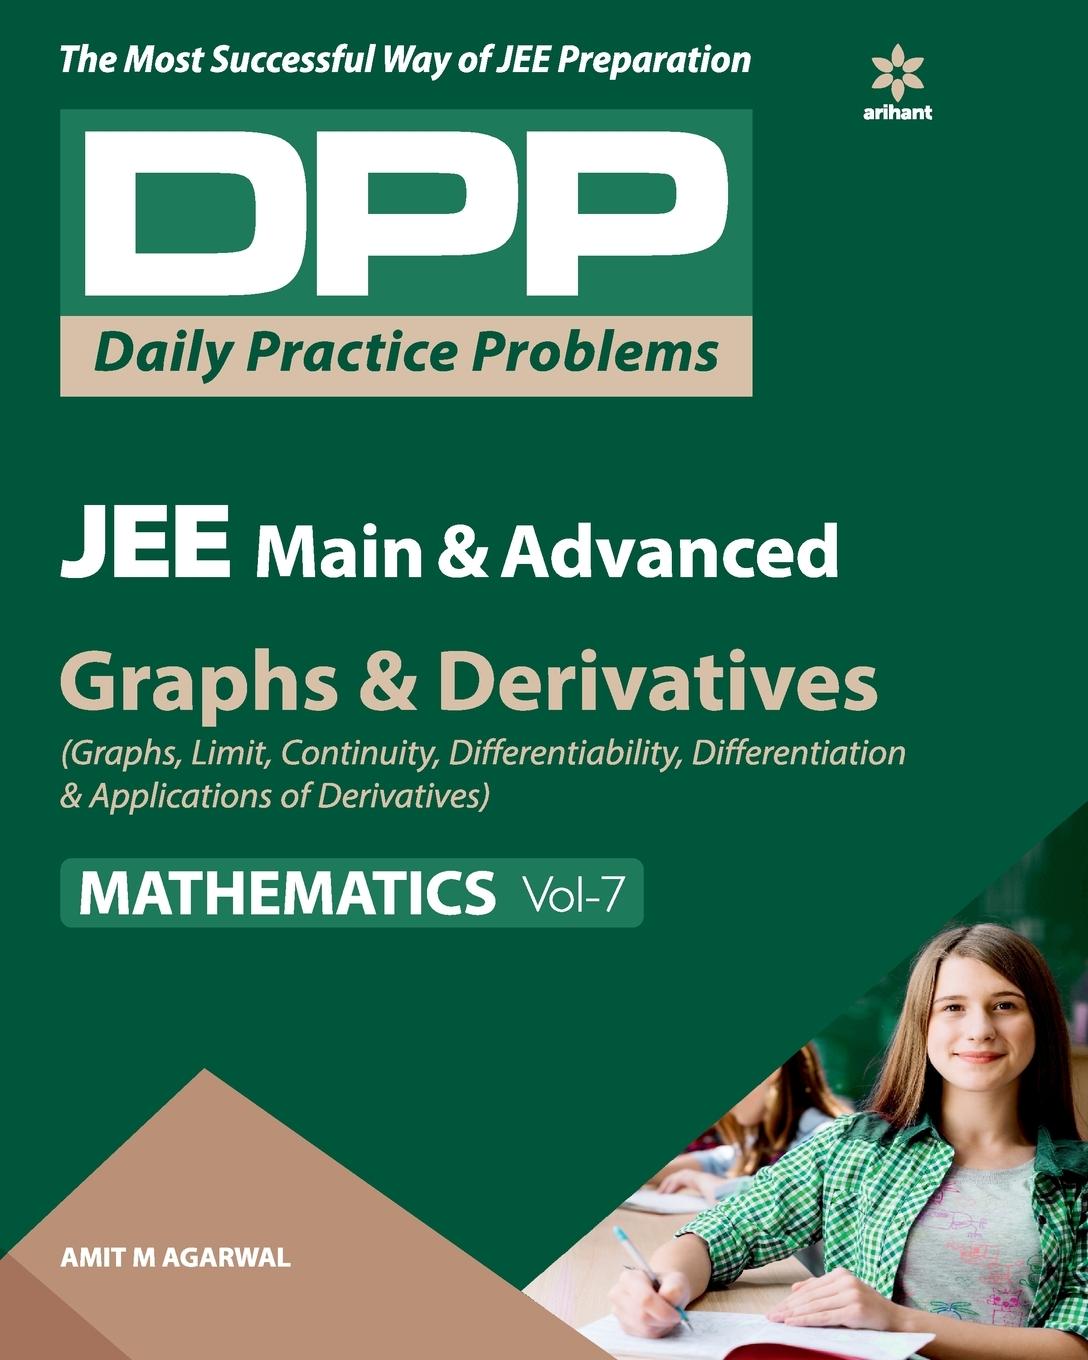 Knjiga Daily Practice Problems (Dpp) for Jee Main & Advanced Graphs & Derivatives Mathematics 2020 